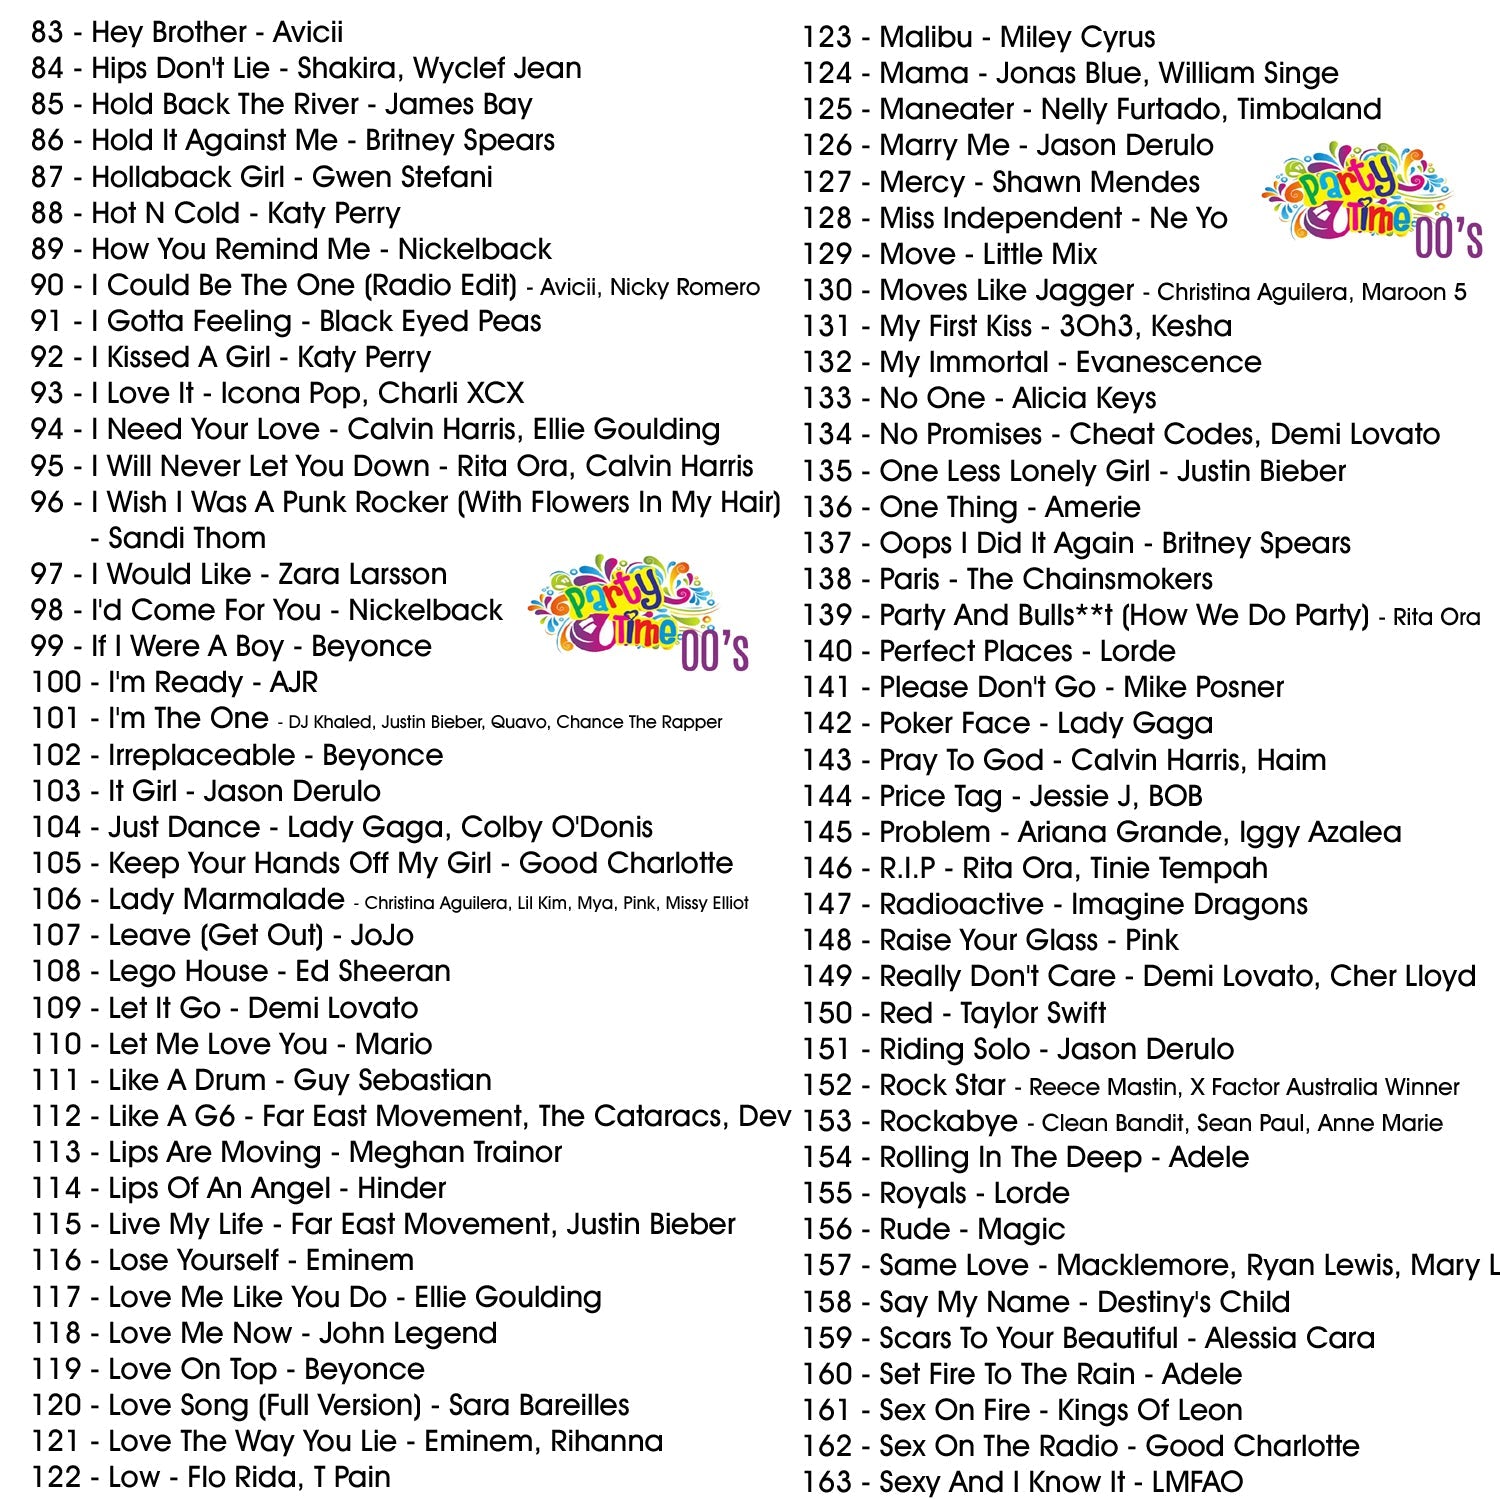 Sonken MP4000 + KBEATBOX CS-200PU + 435 Songs from the 90's & 00's - Karaoke Home Entertainment